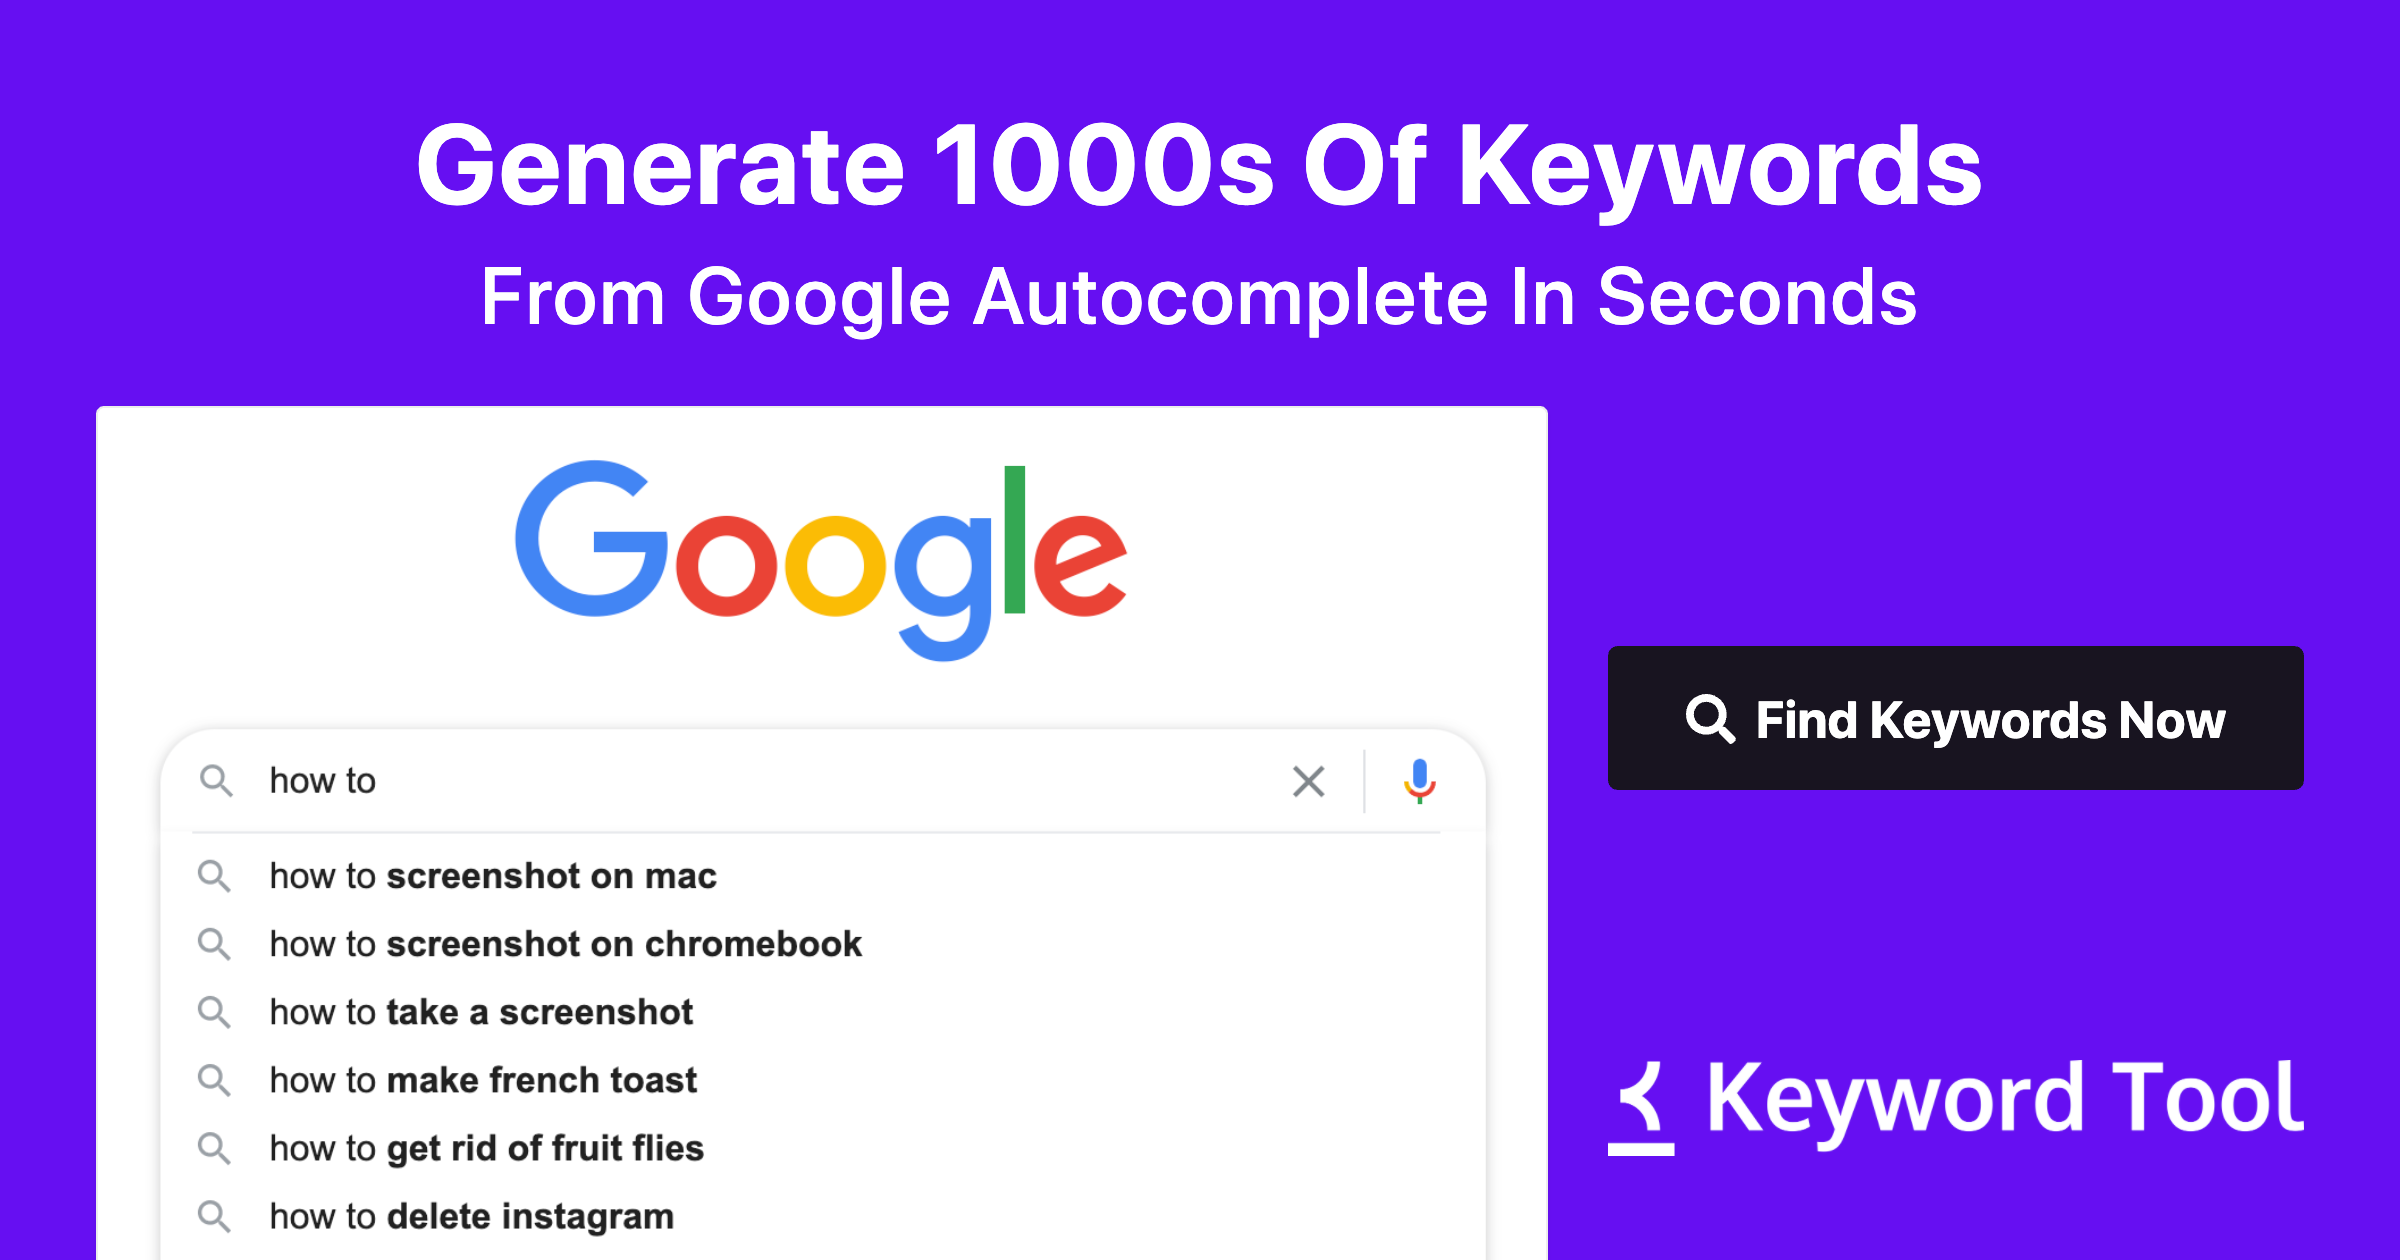 google keyword research tool